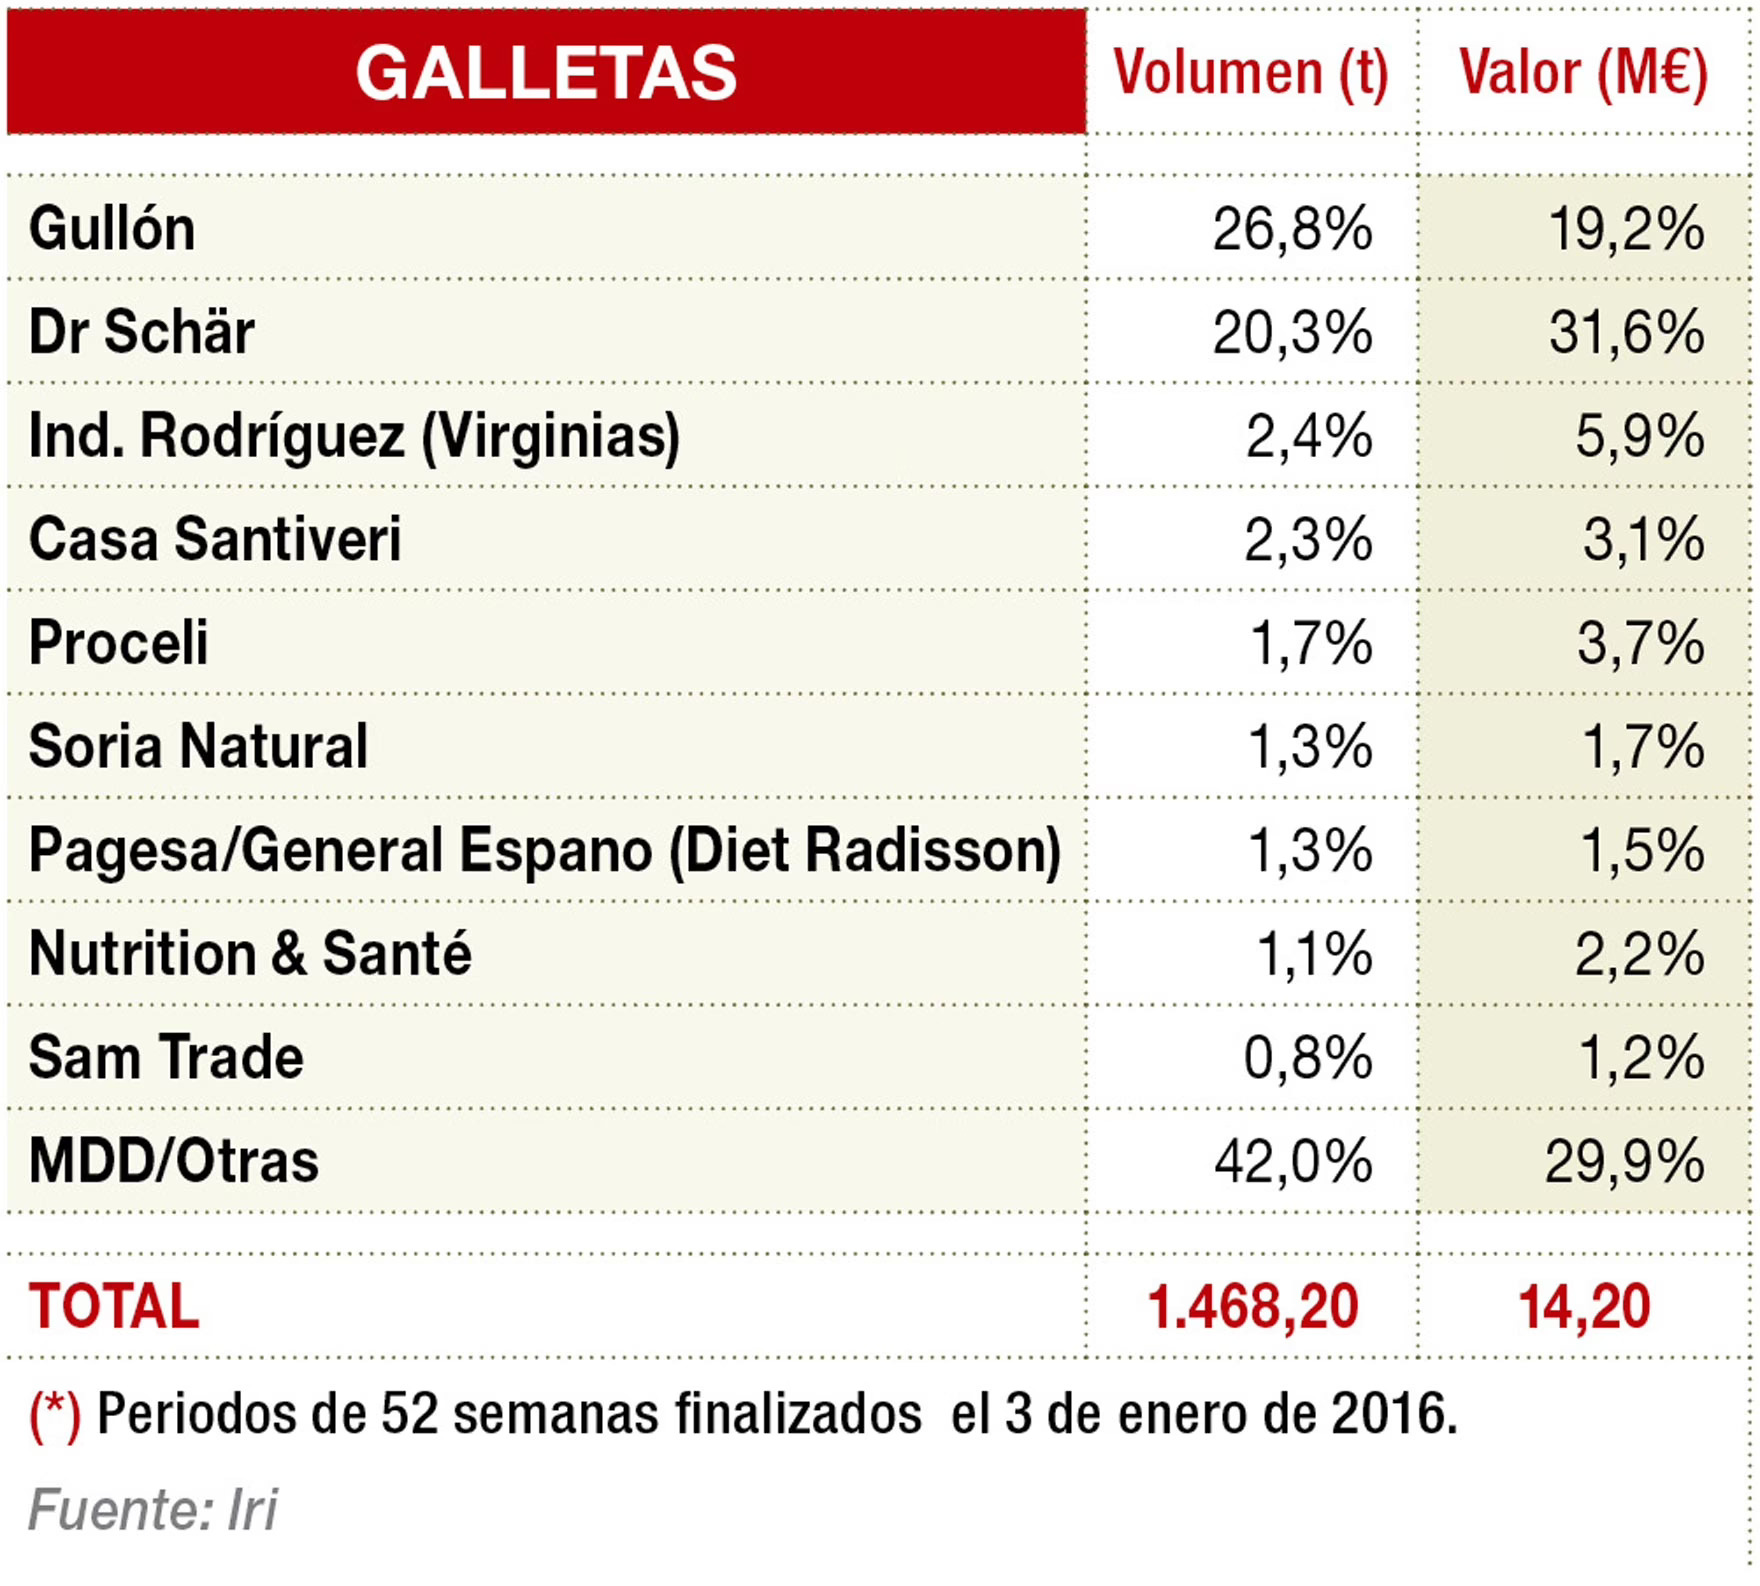 Principales marcas de alimentos sin gluten  en distribución moderna por categorías (2015)